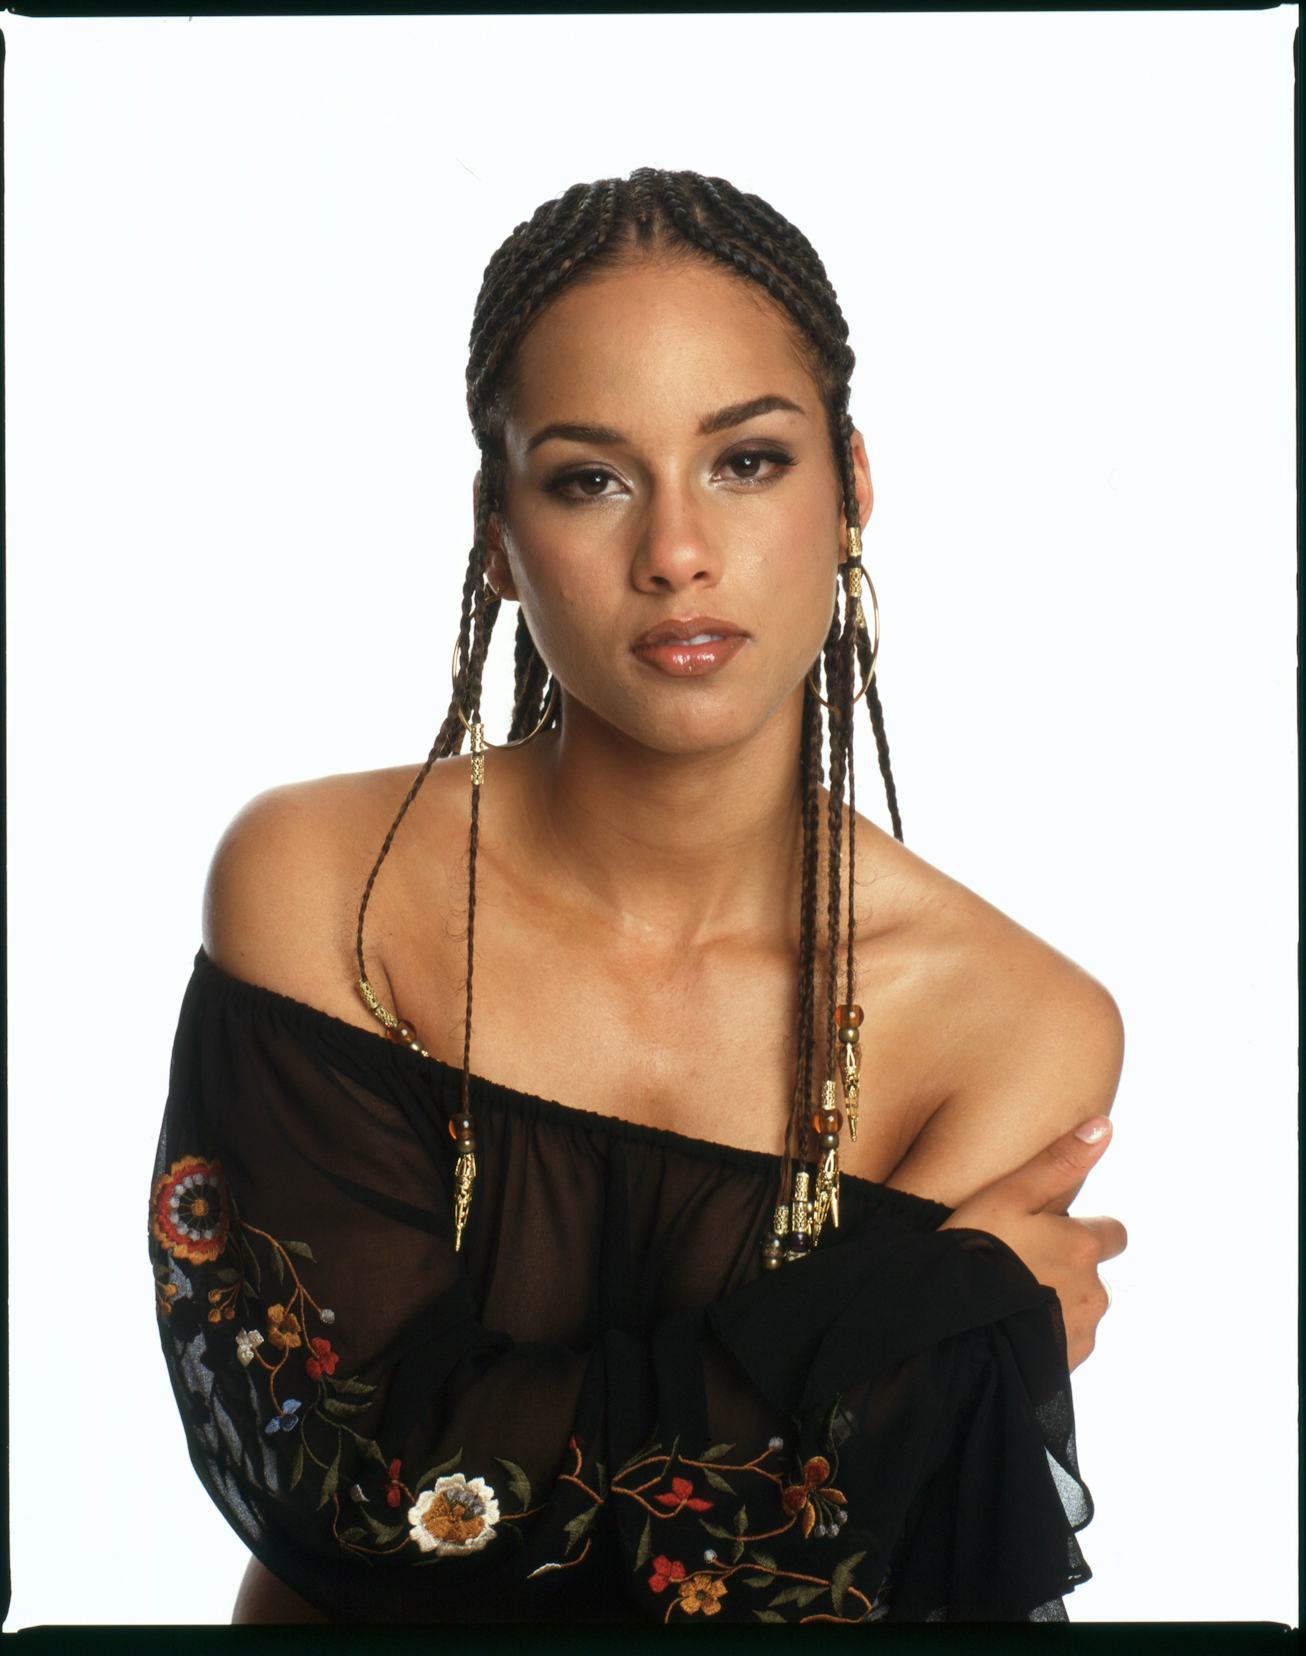 Alicia Keys, her hand on her shoulder, poses in a top, braids hanging down below her shoulders